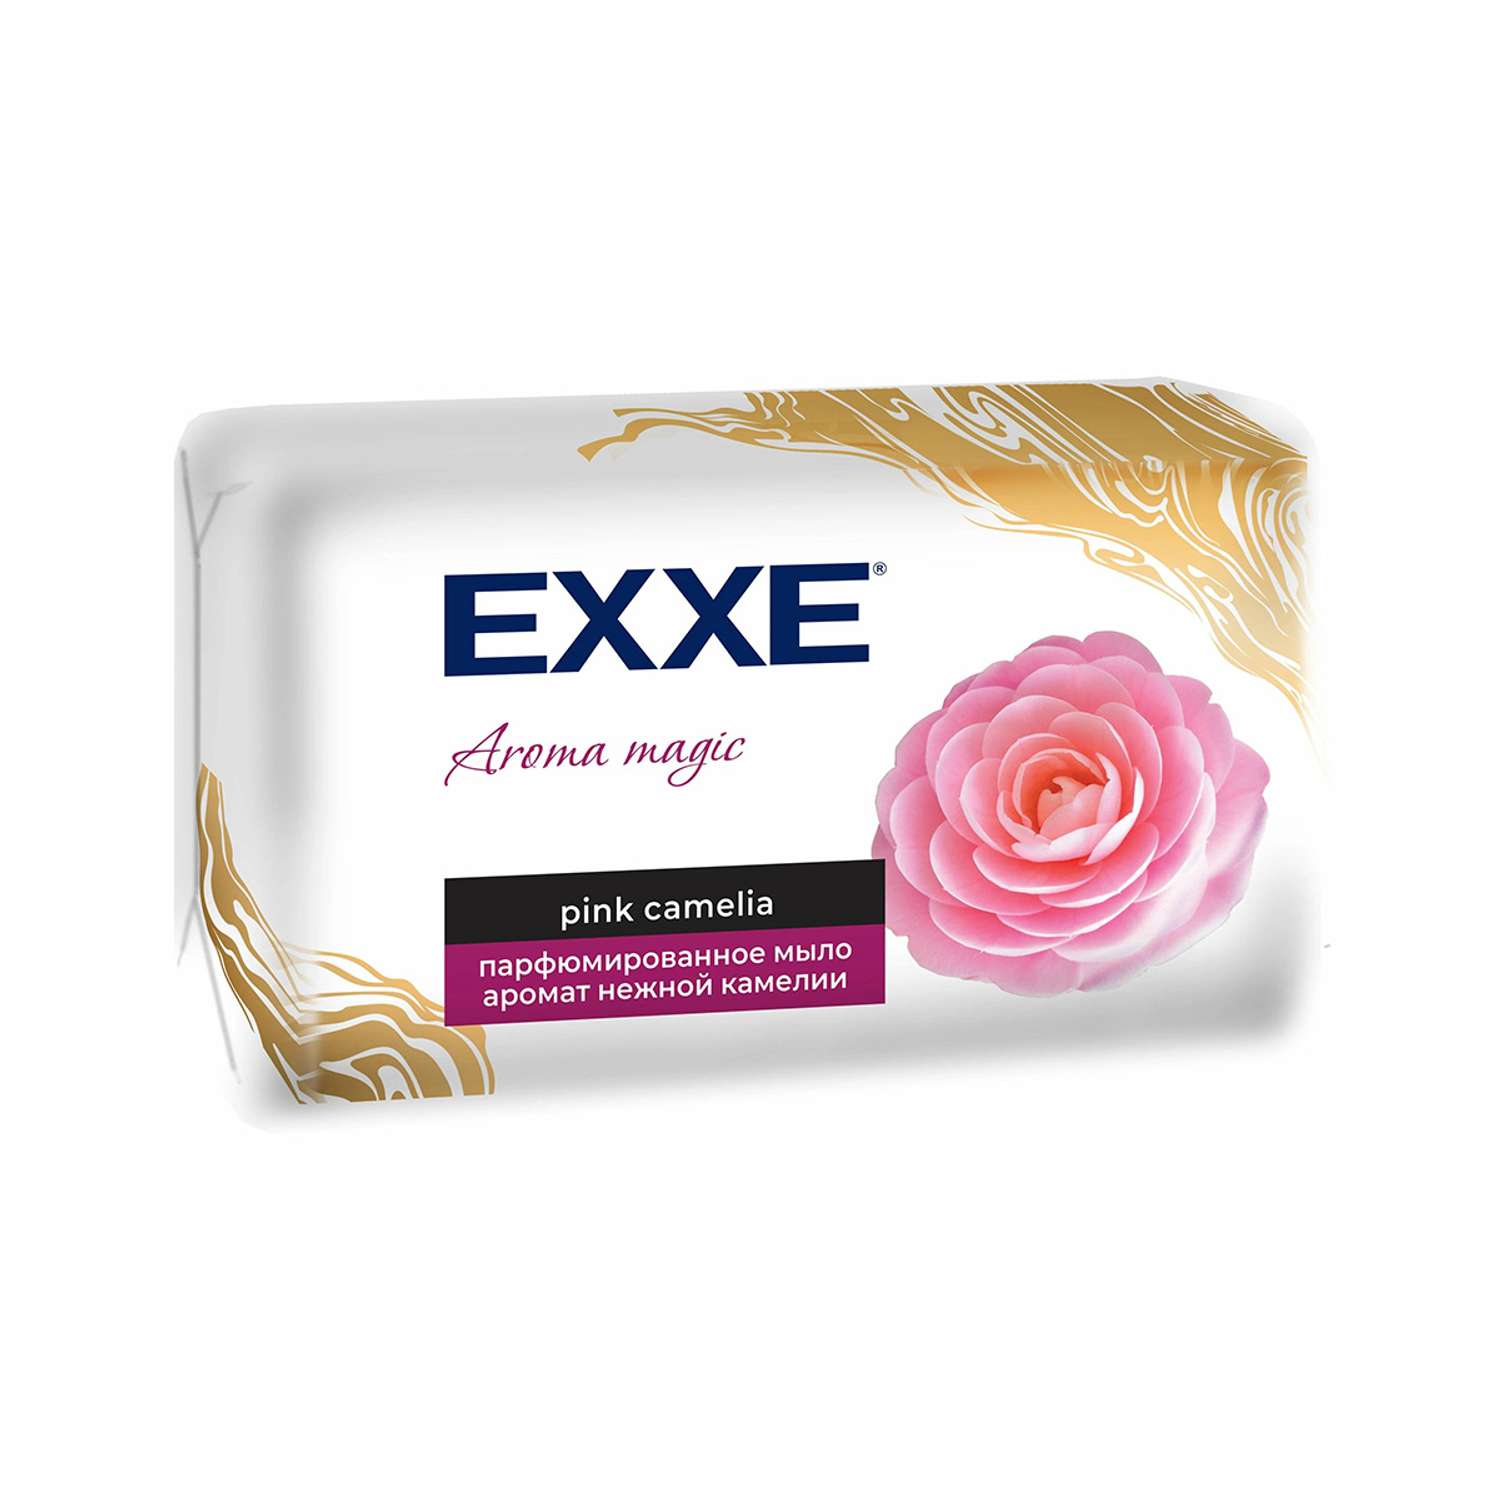 Туалетное мыло EXXE Aroma Magic нежная камелия 140 г - фото 1